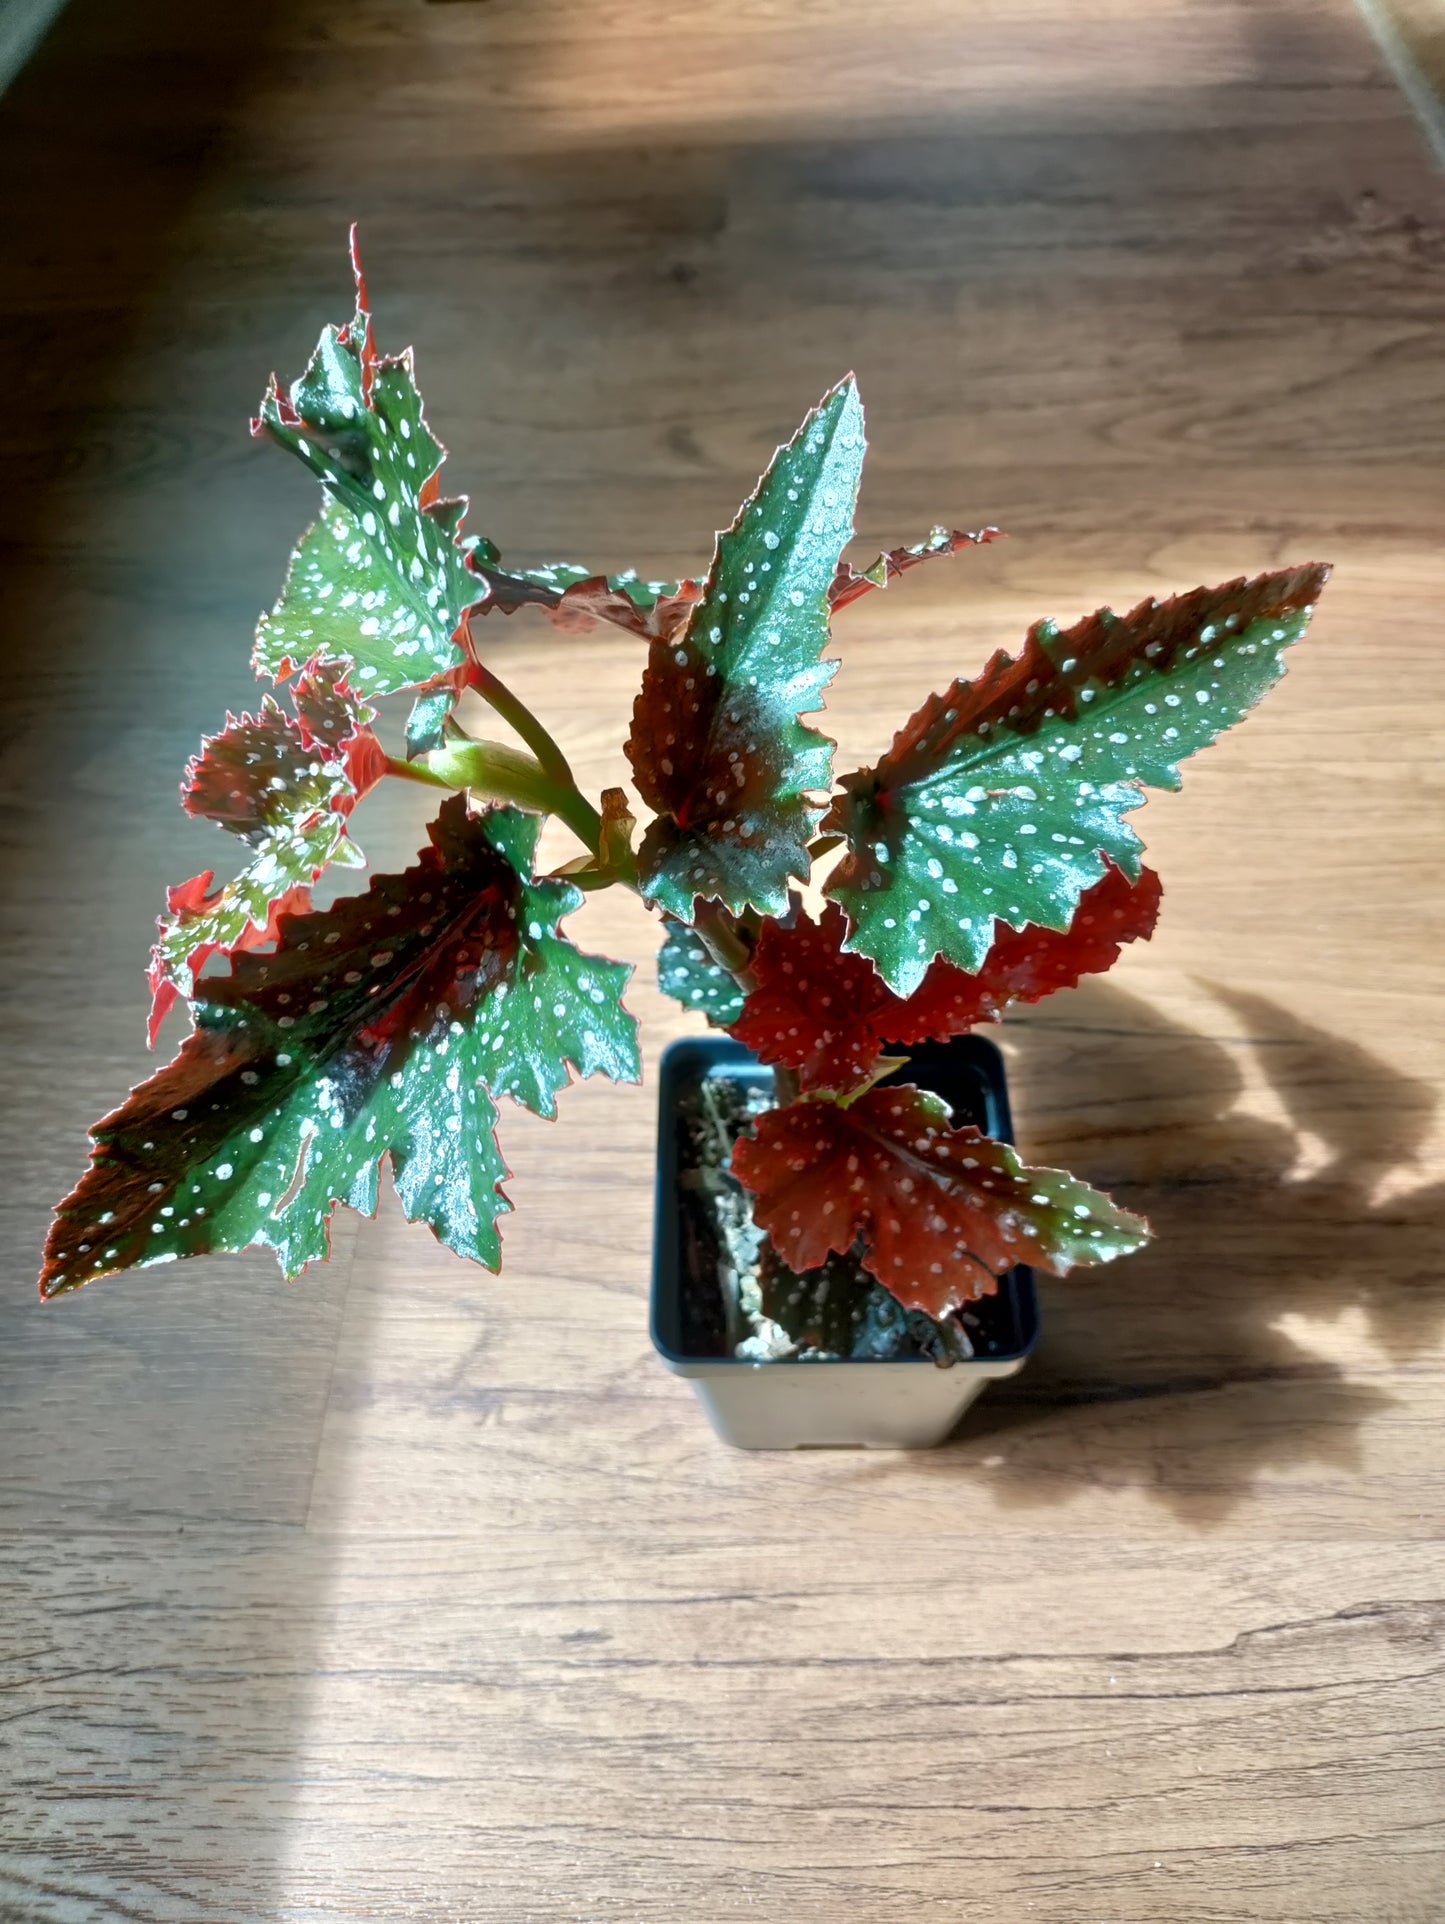 Angel Wing Begonia 'Fannie Moser' - polka dot begonia